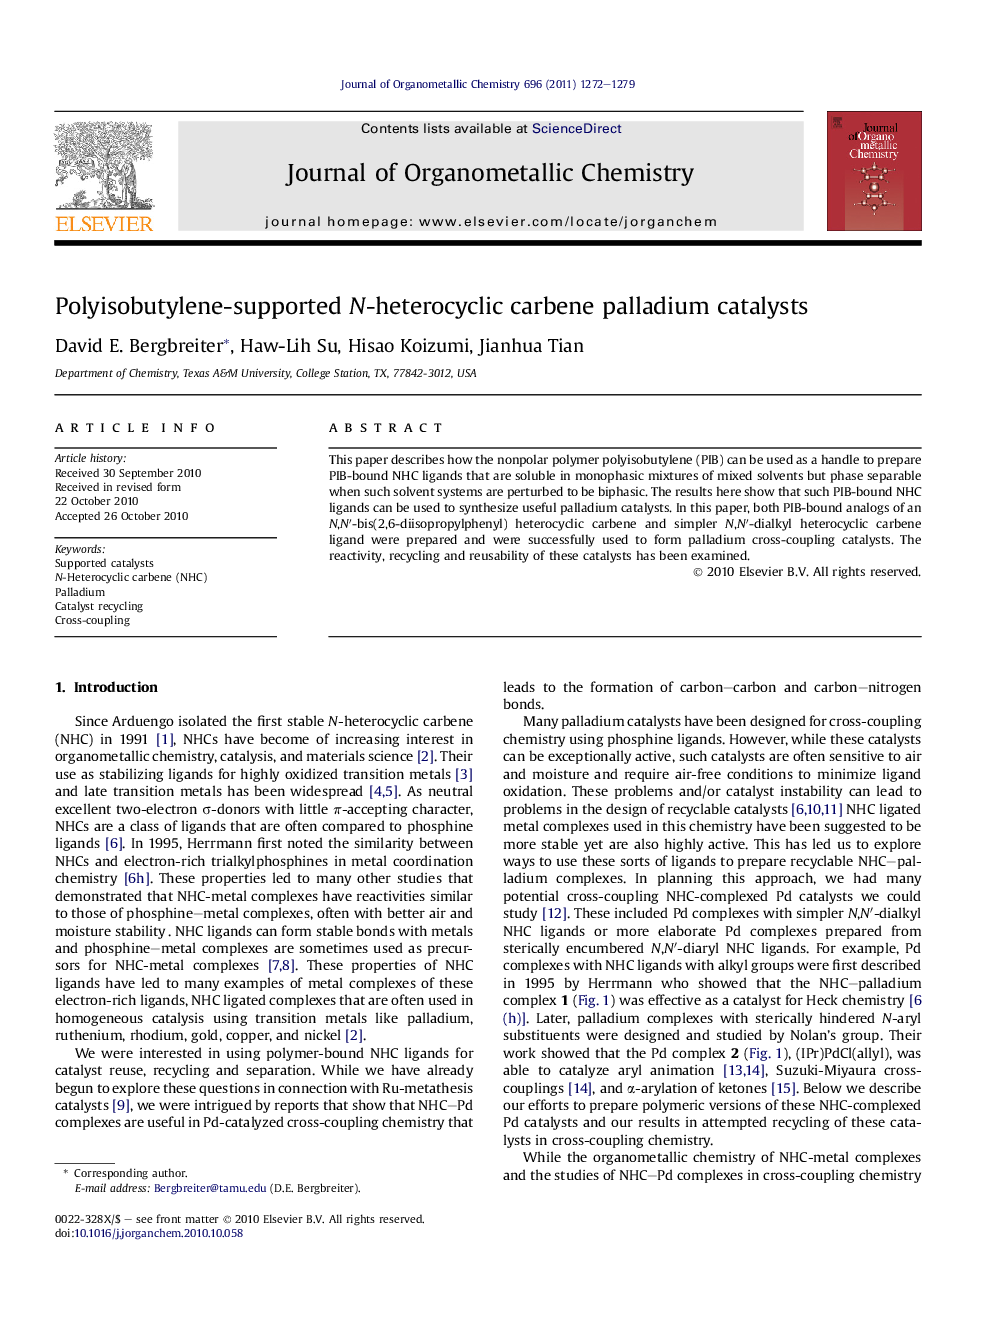 Polyisobutylene-supported N-heterocyclic carbene palladium catalysts